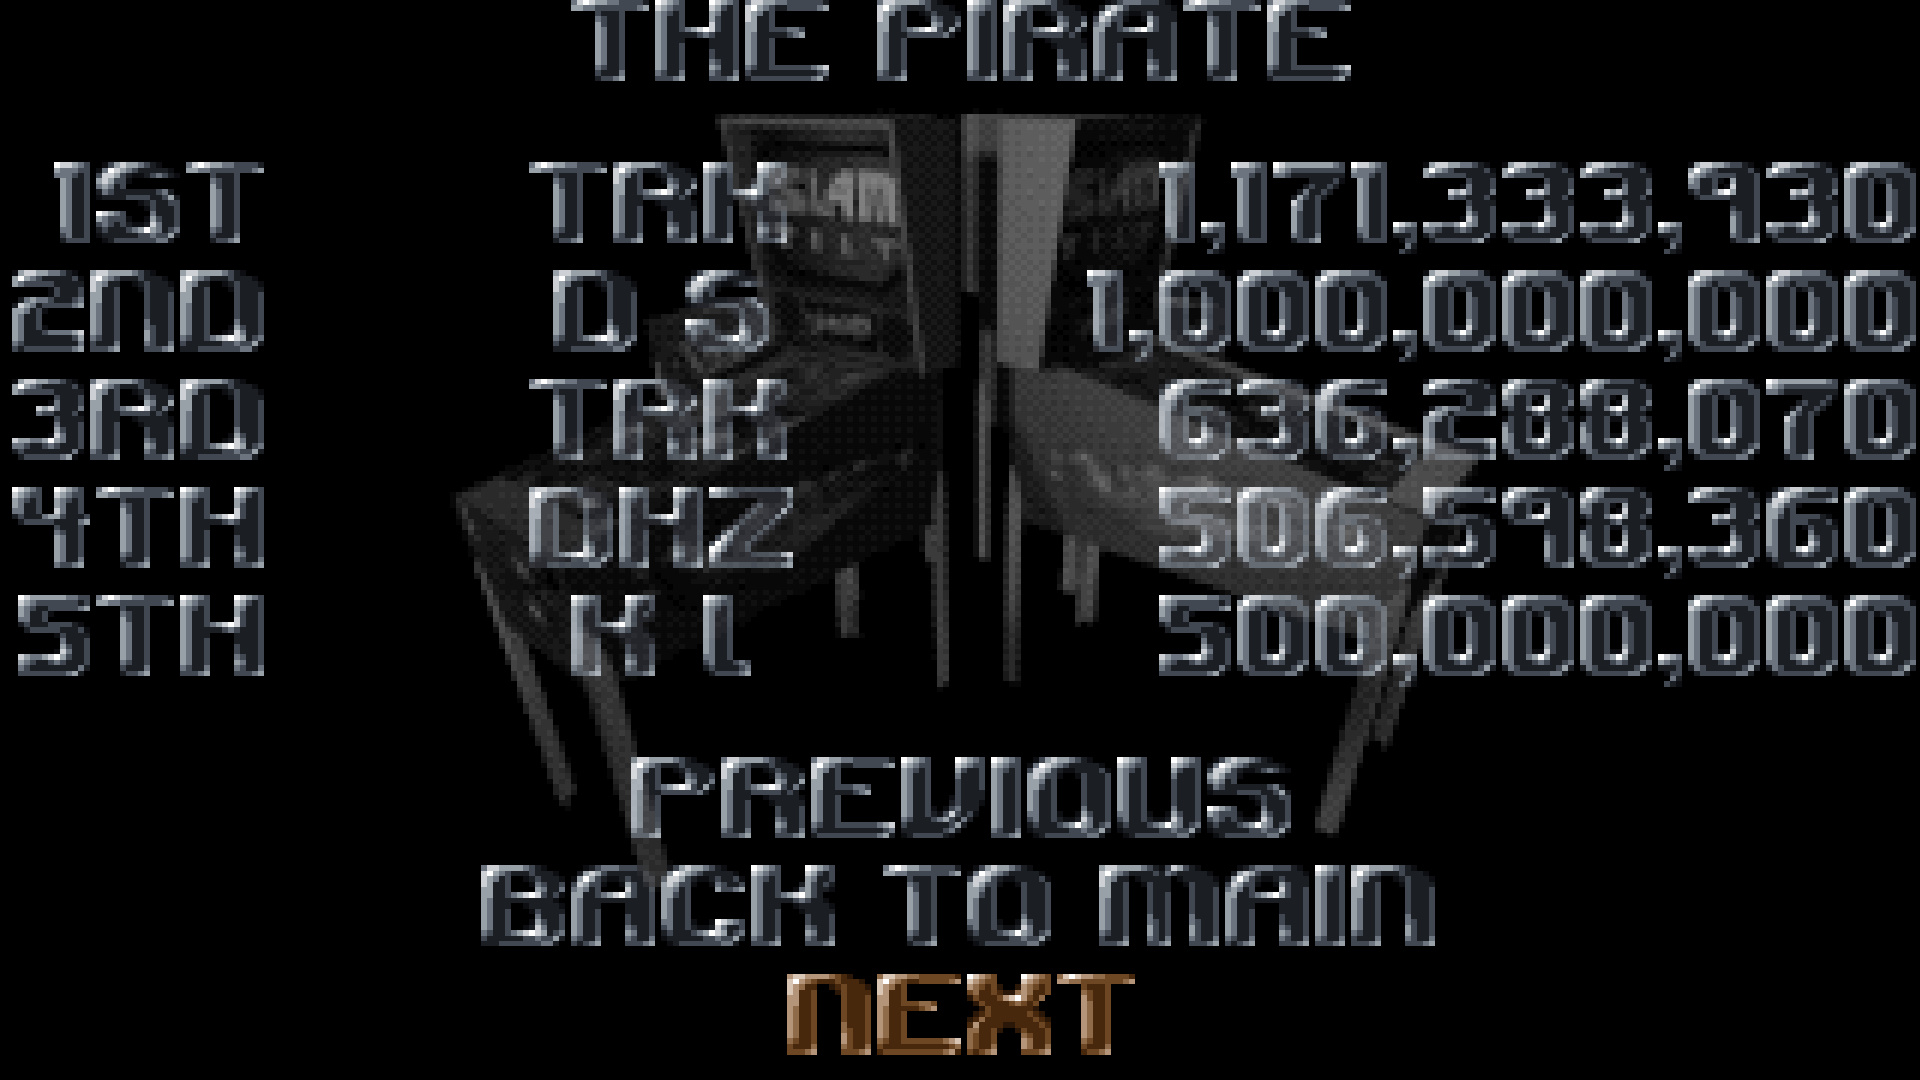 TheTrickster: Slam Tilt: The Pirate (Amiga Emulated) 1,171,333,930 points on 2016-03-24 18:18:59